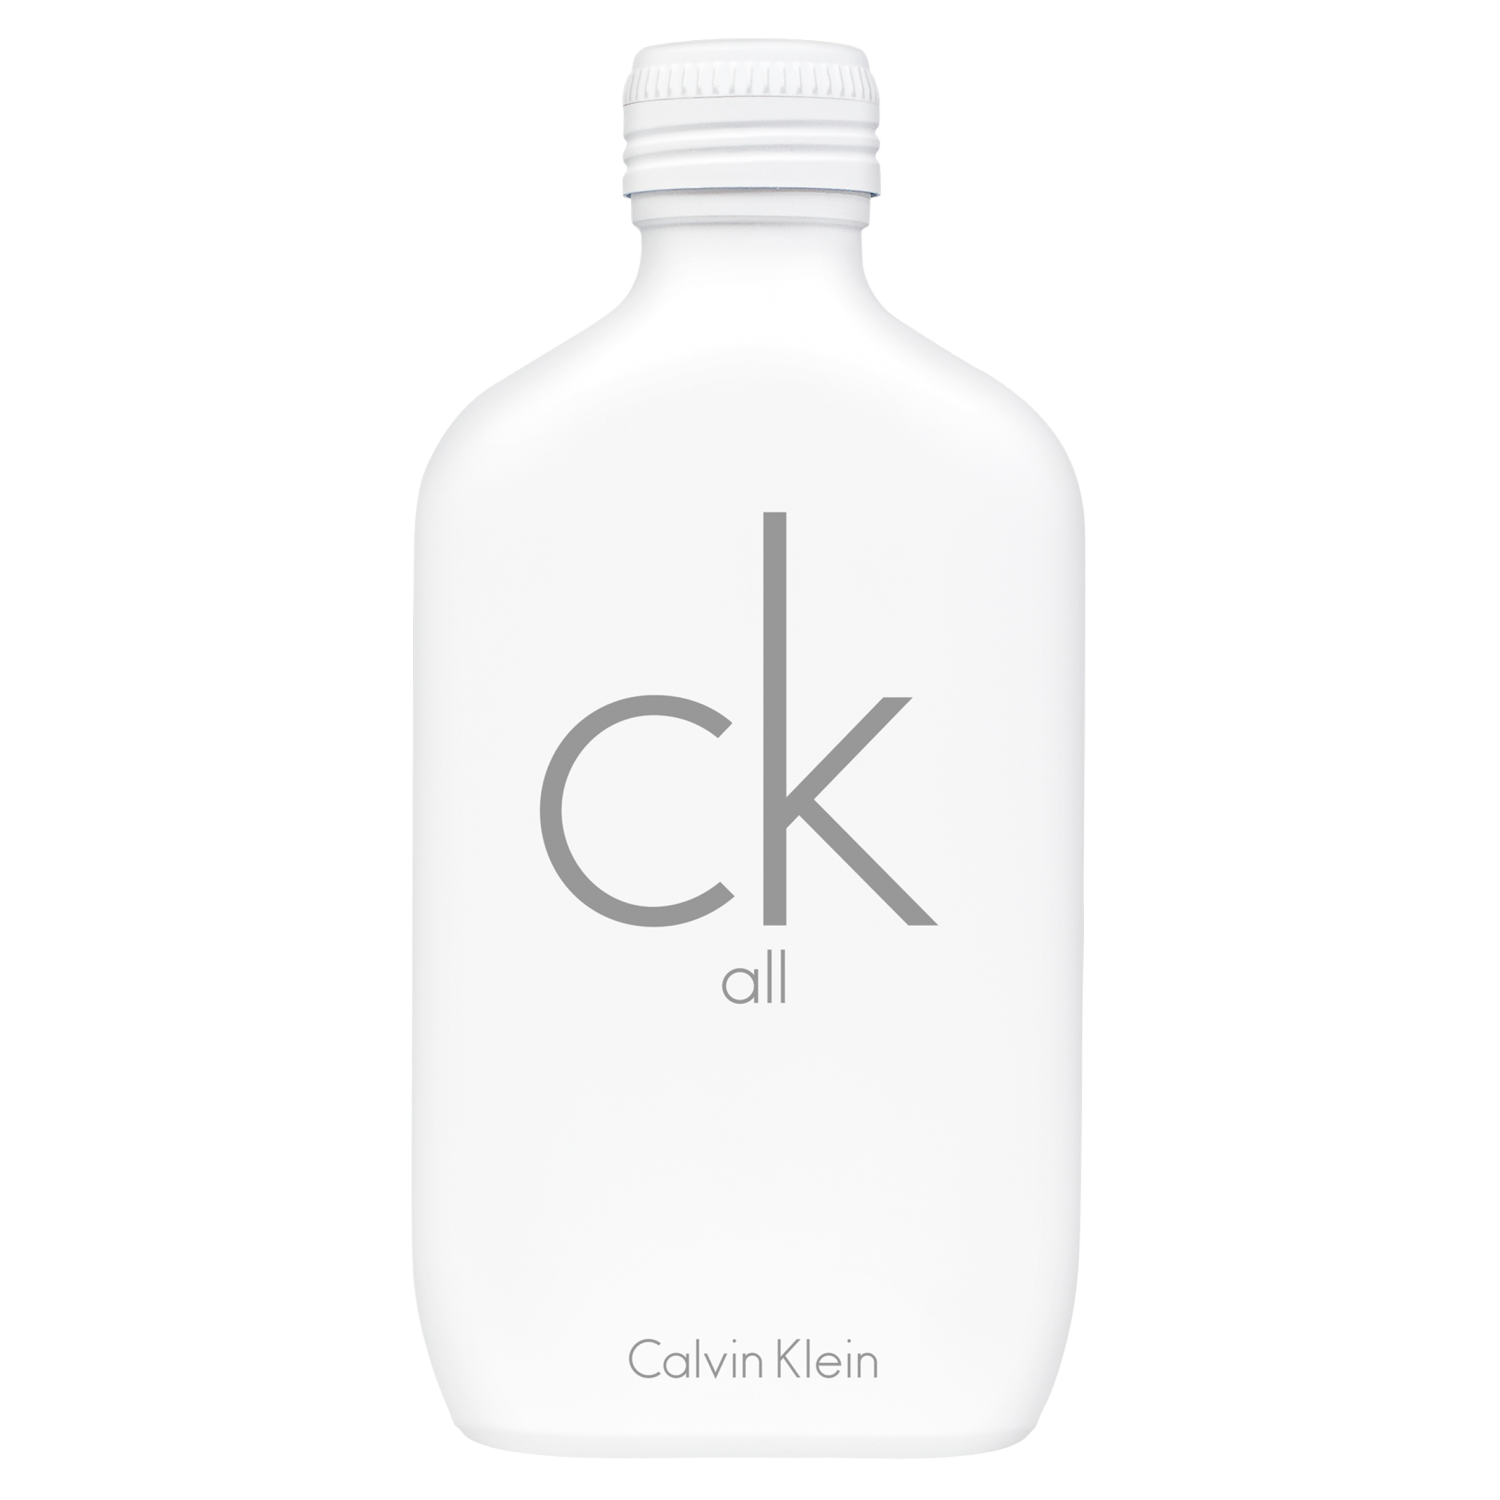 calvin klein черный купальник ck refined с вырезами Туалетная вода унисекс Calvin Klein All, 100 мл